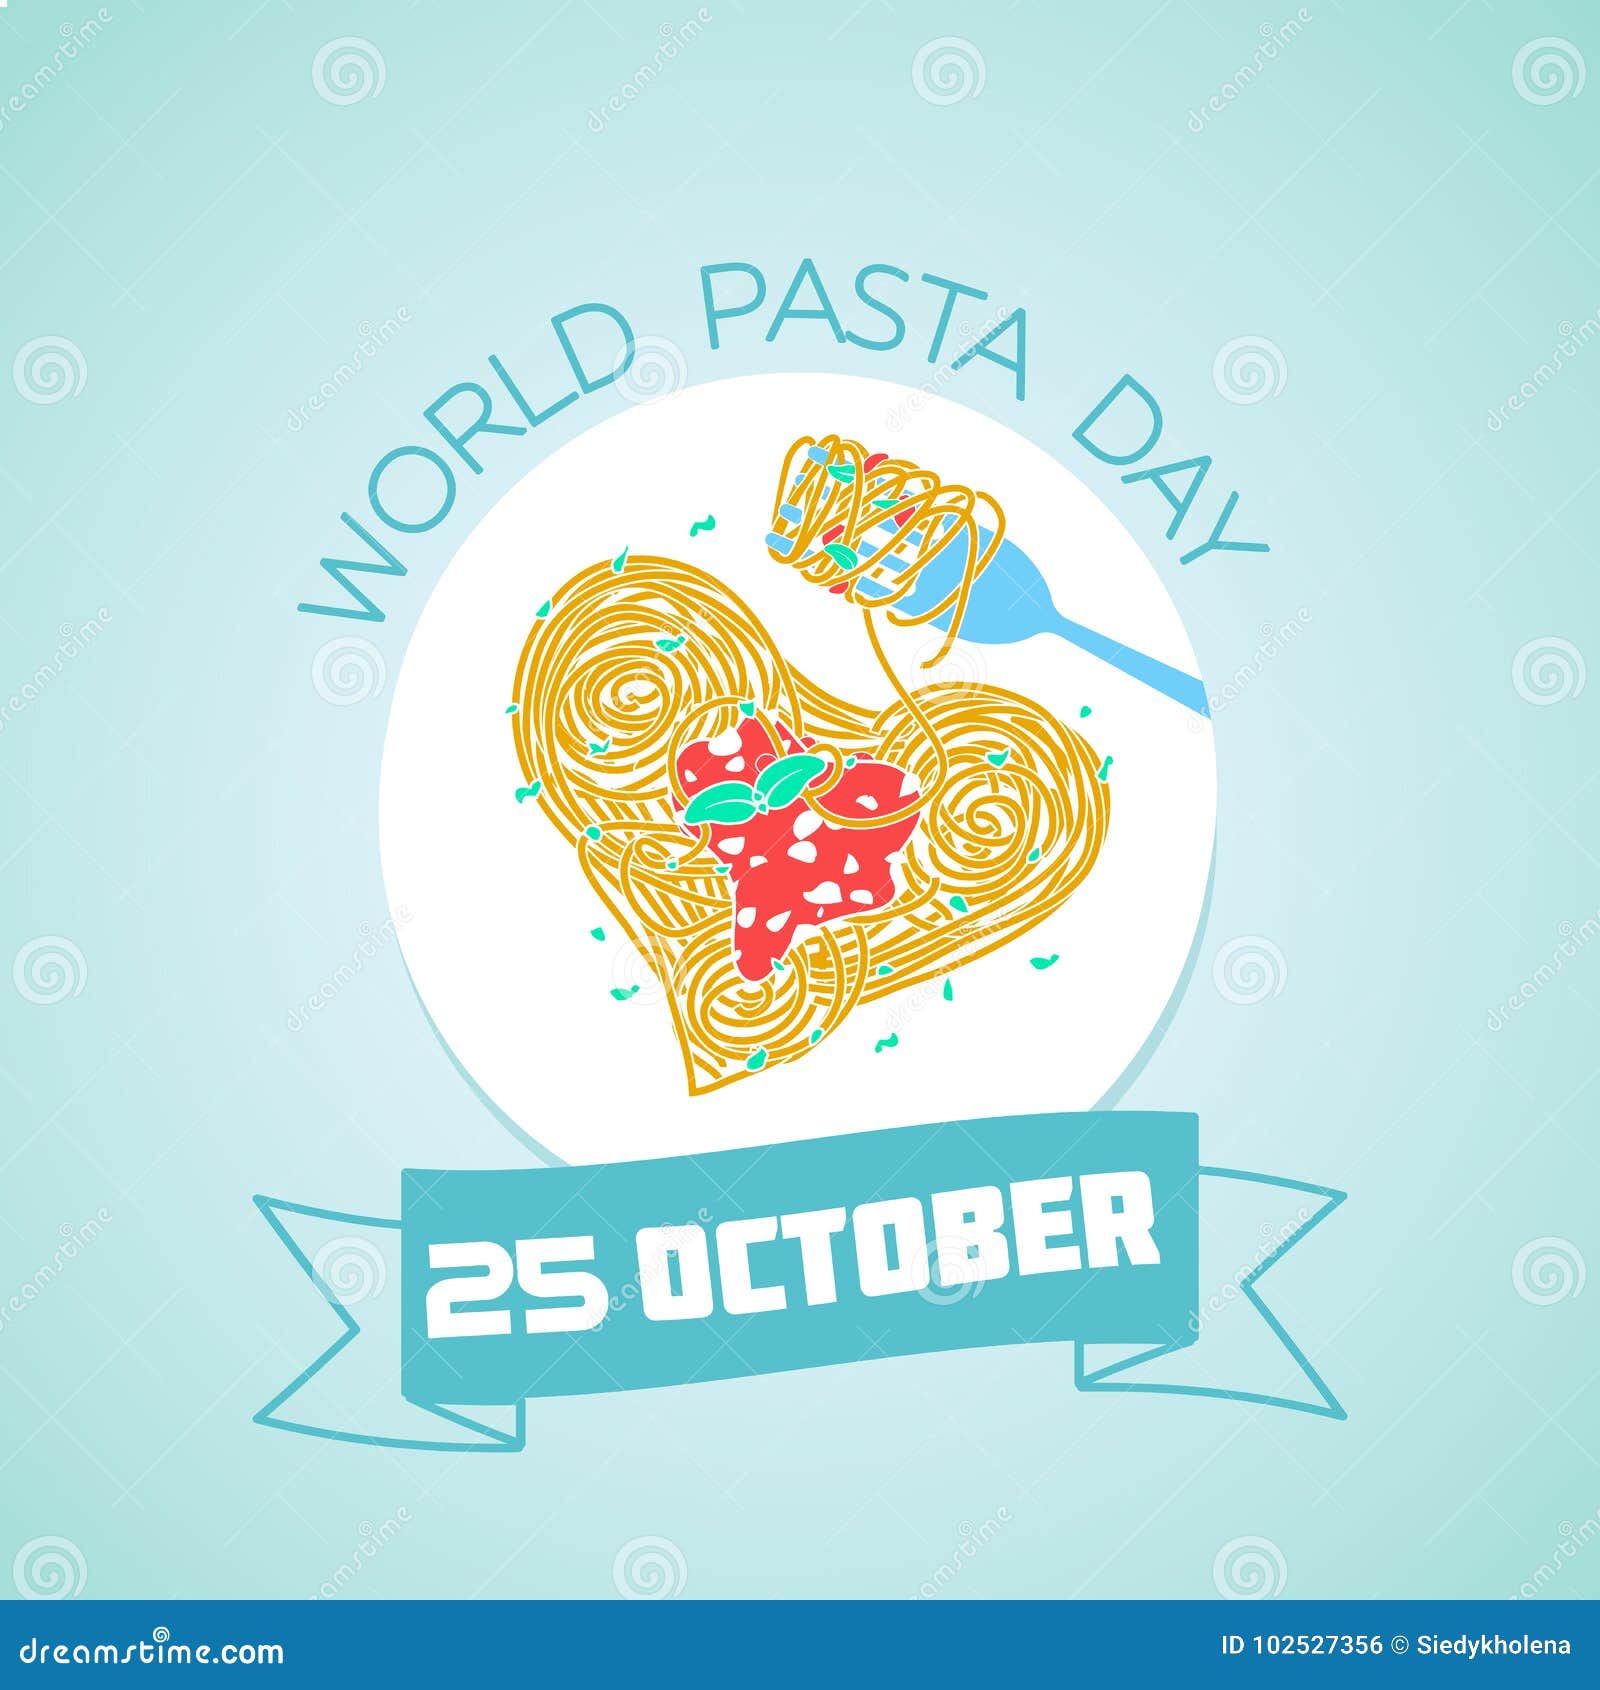 25 october World Pasta Day stock illustration. Illustration of cooking -  102527356